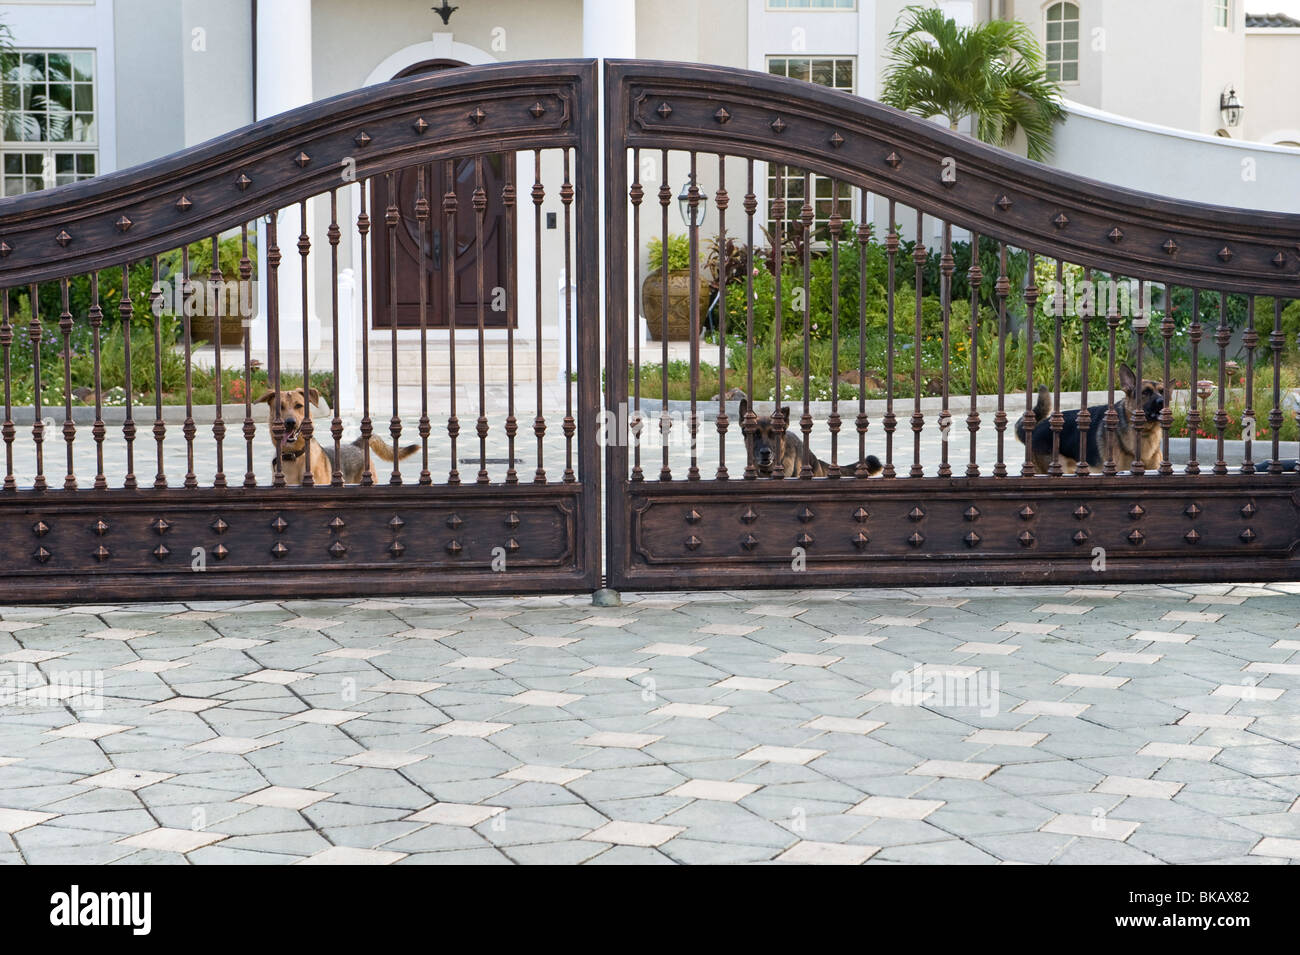 Tor mit Wächter Hunde Rodney Bay St. Lucia Windward-Inseln West Indies Karibik Stockfoto